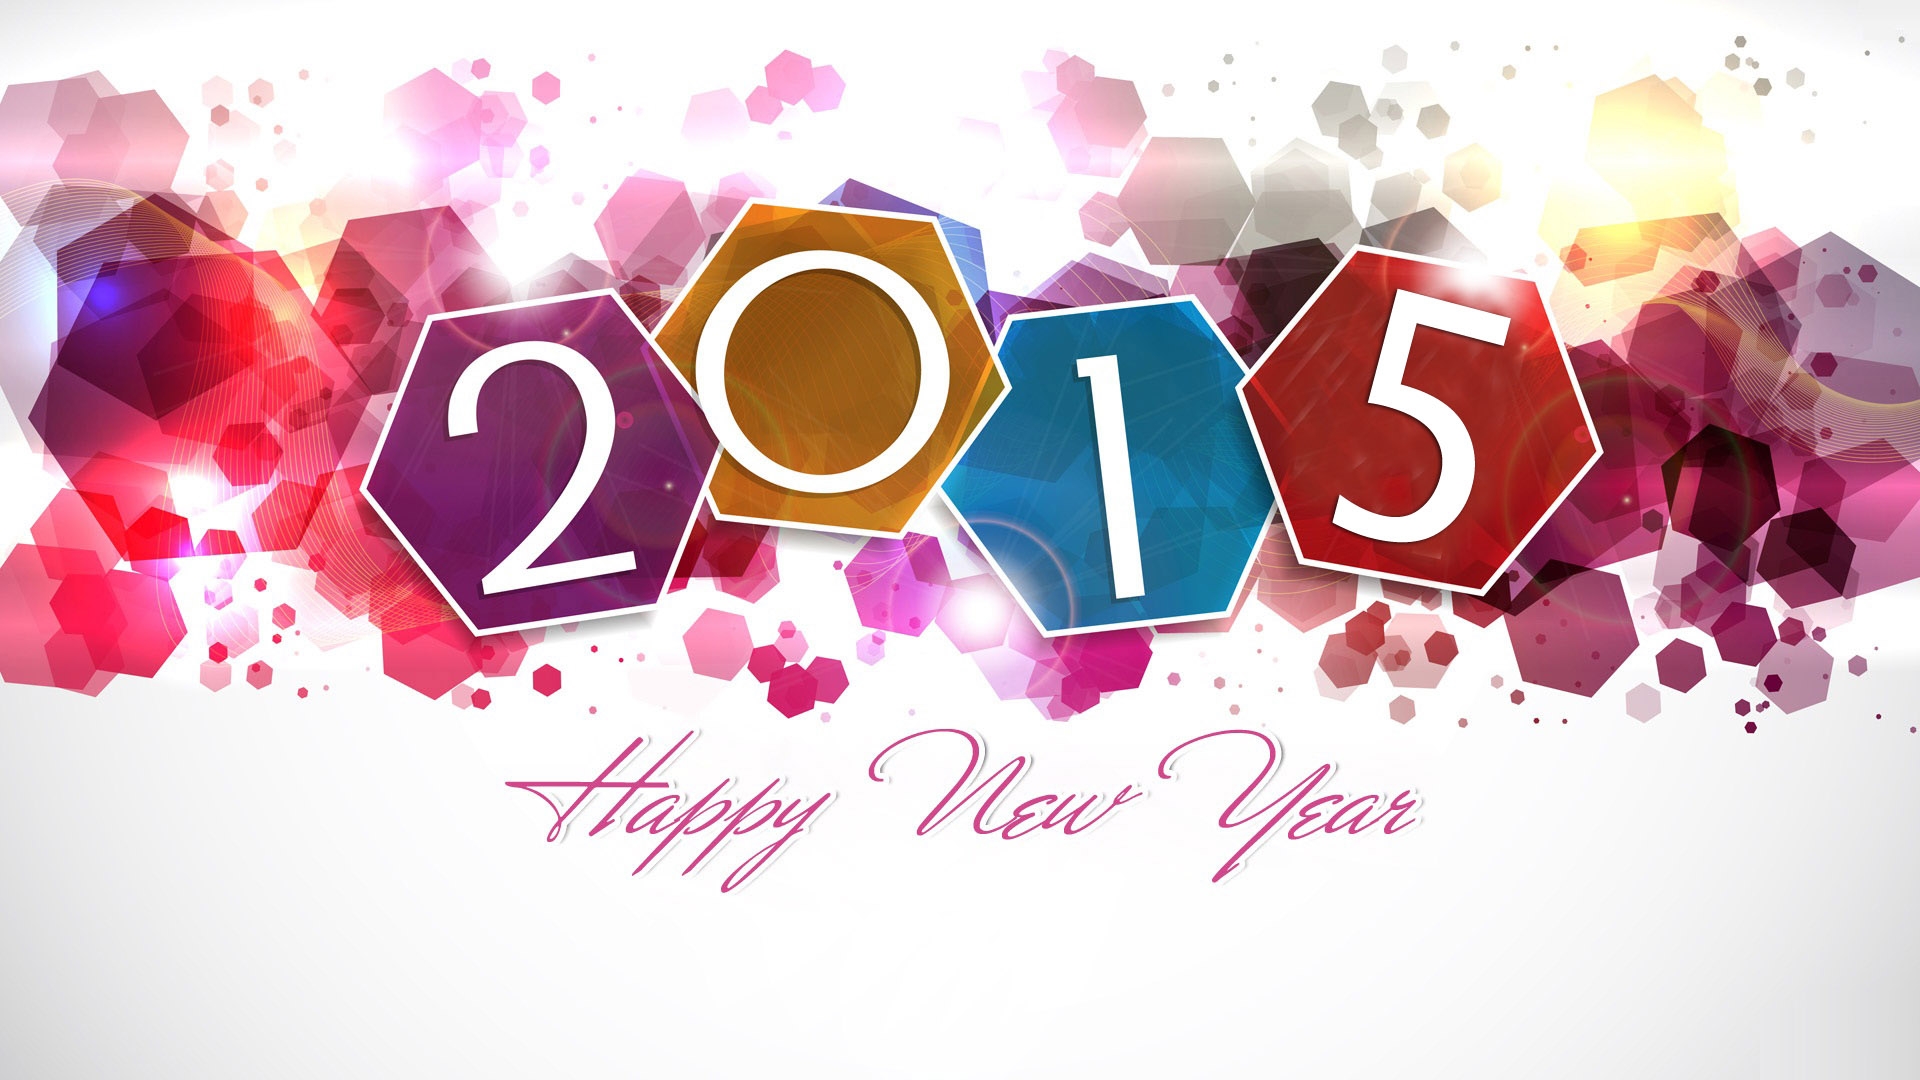 holiday, new year 2015